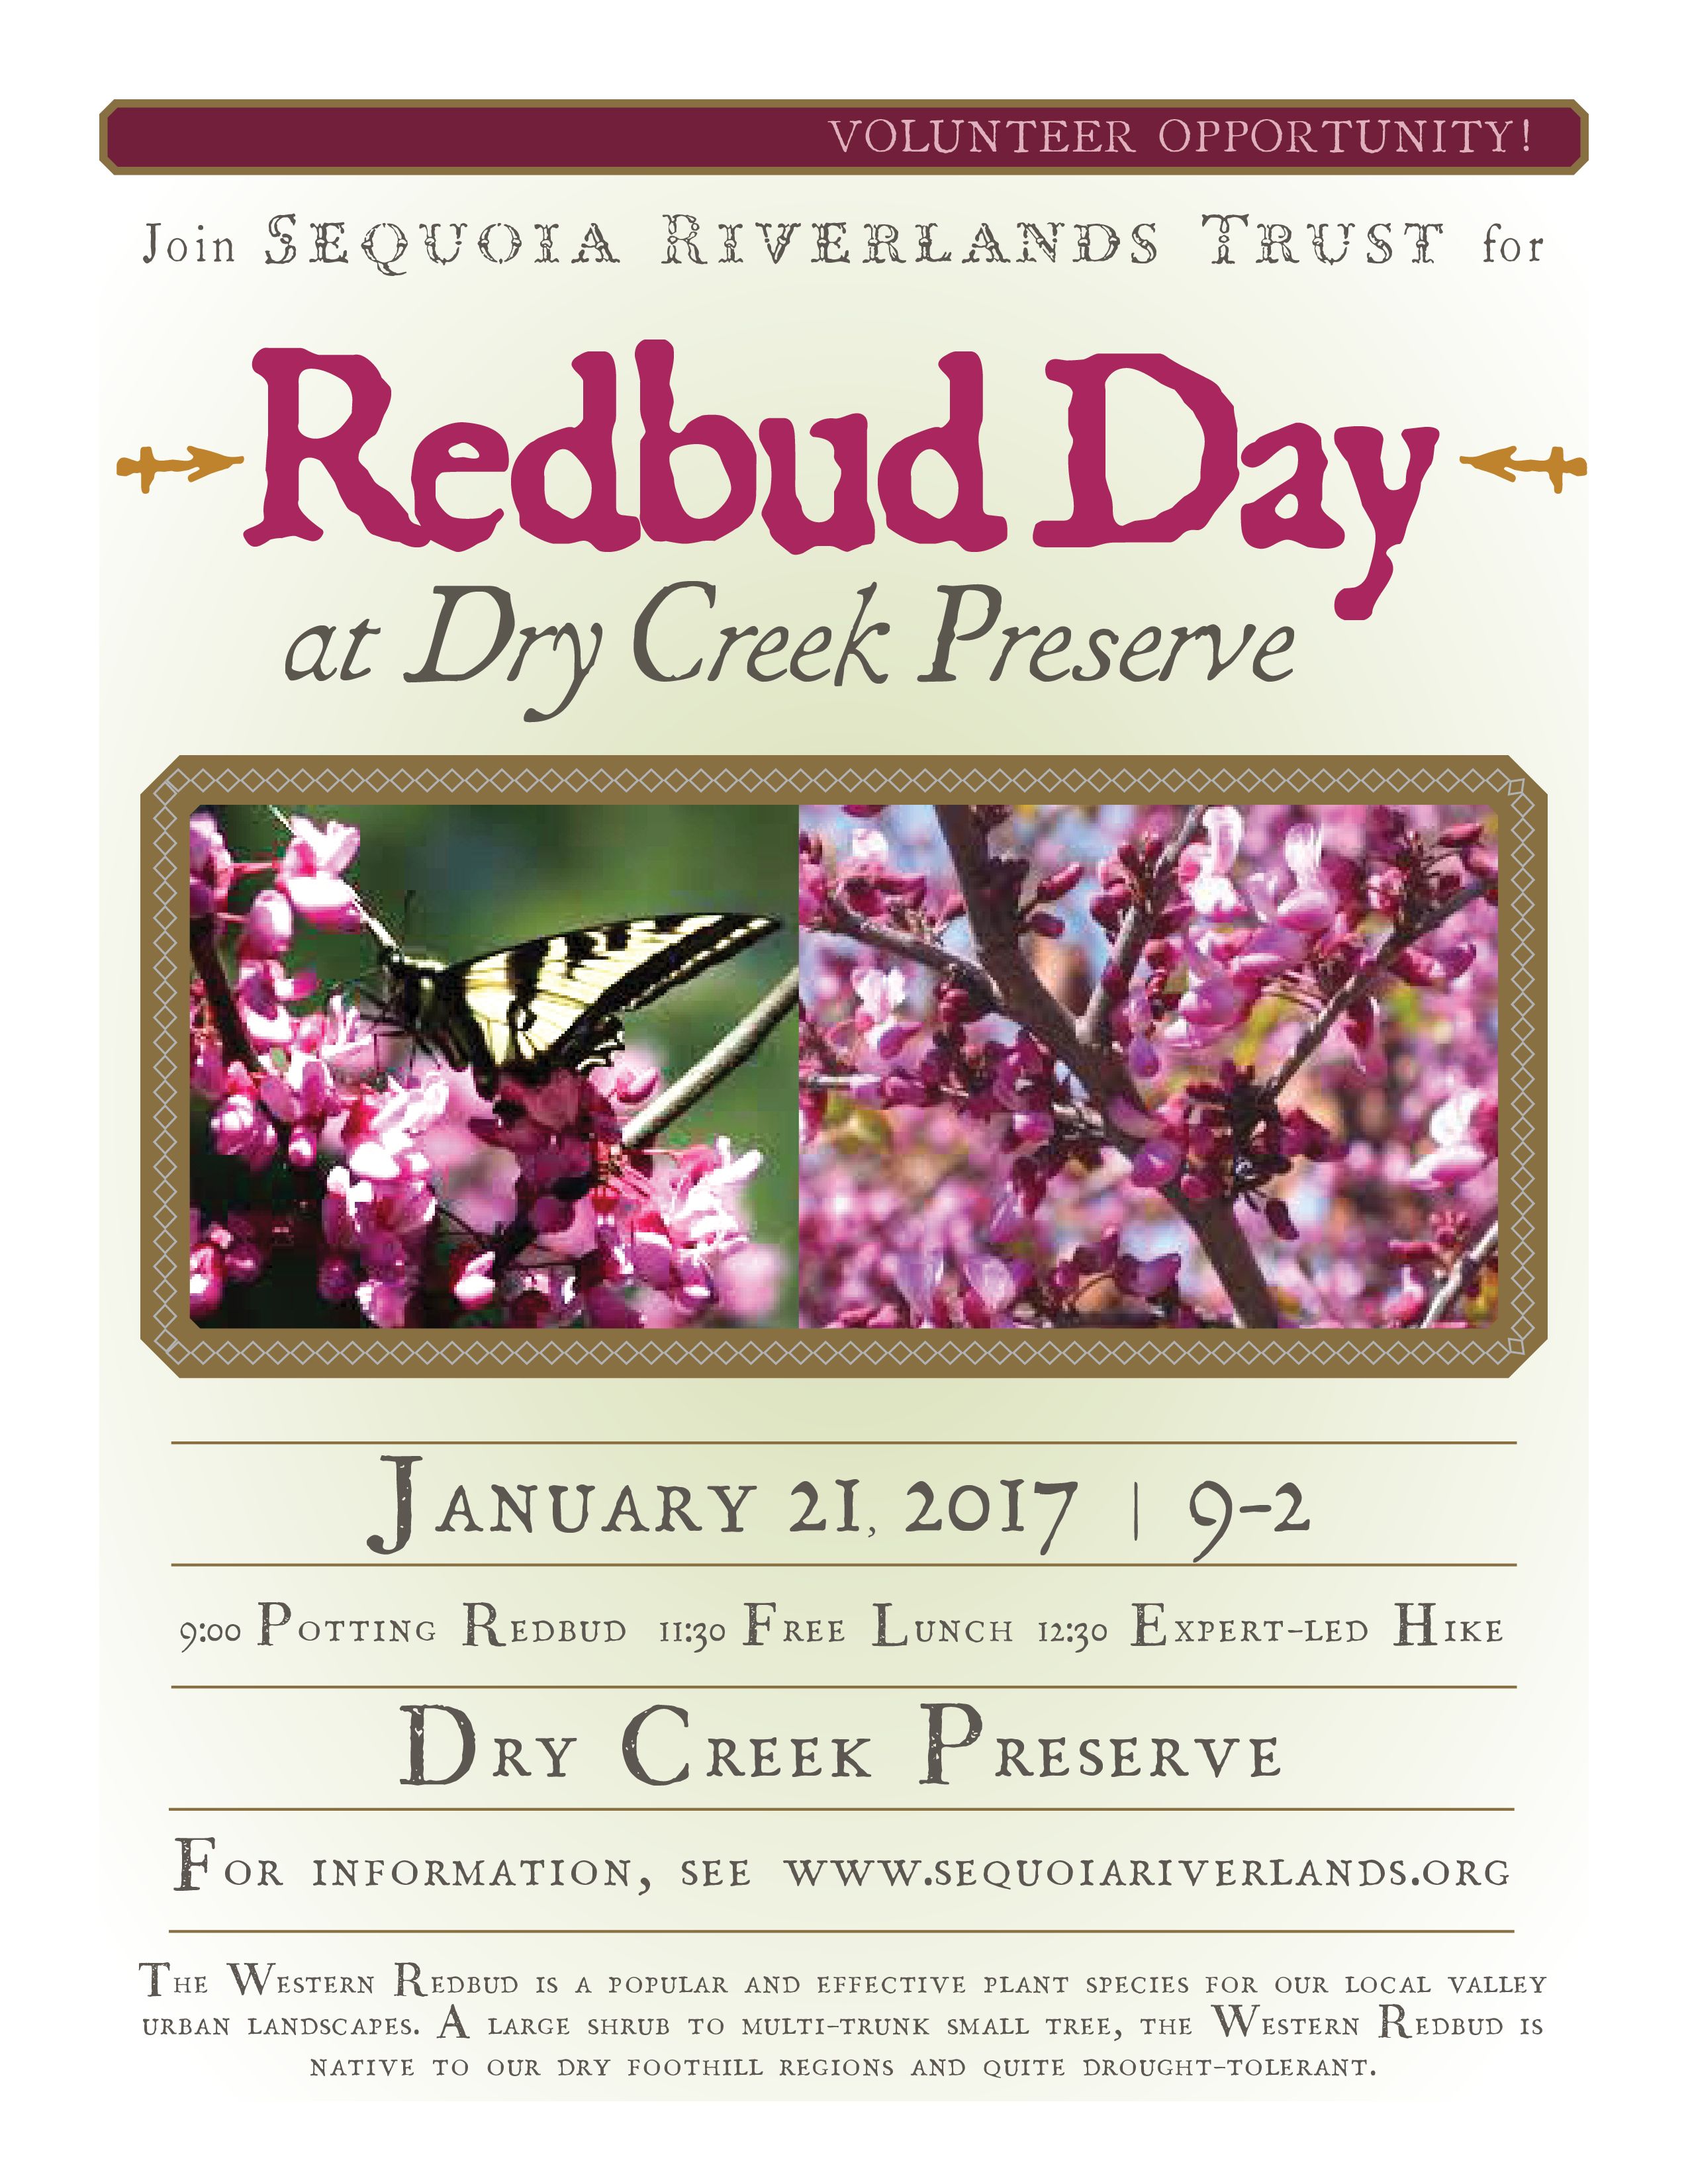 Redbud work day at Dry Creek Preserve